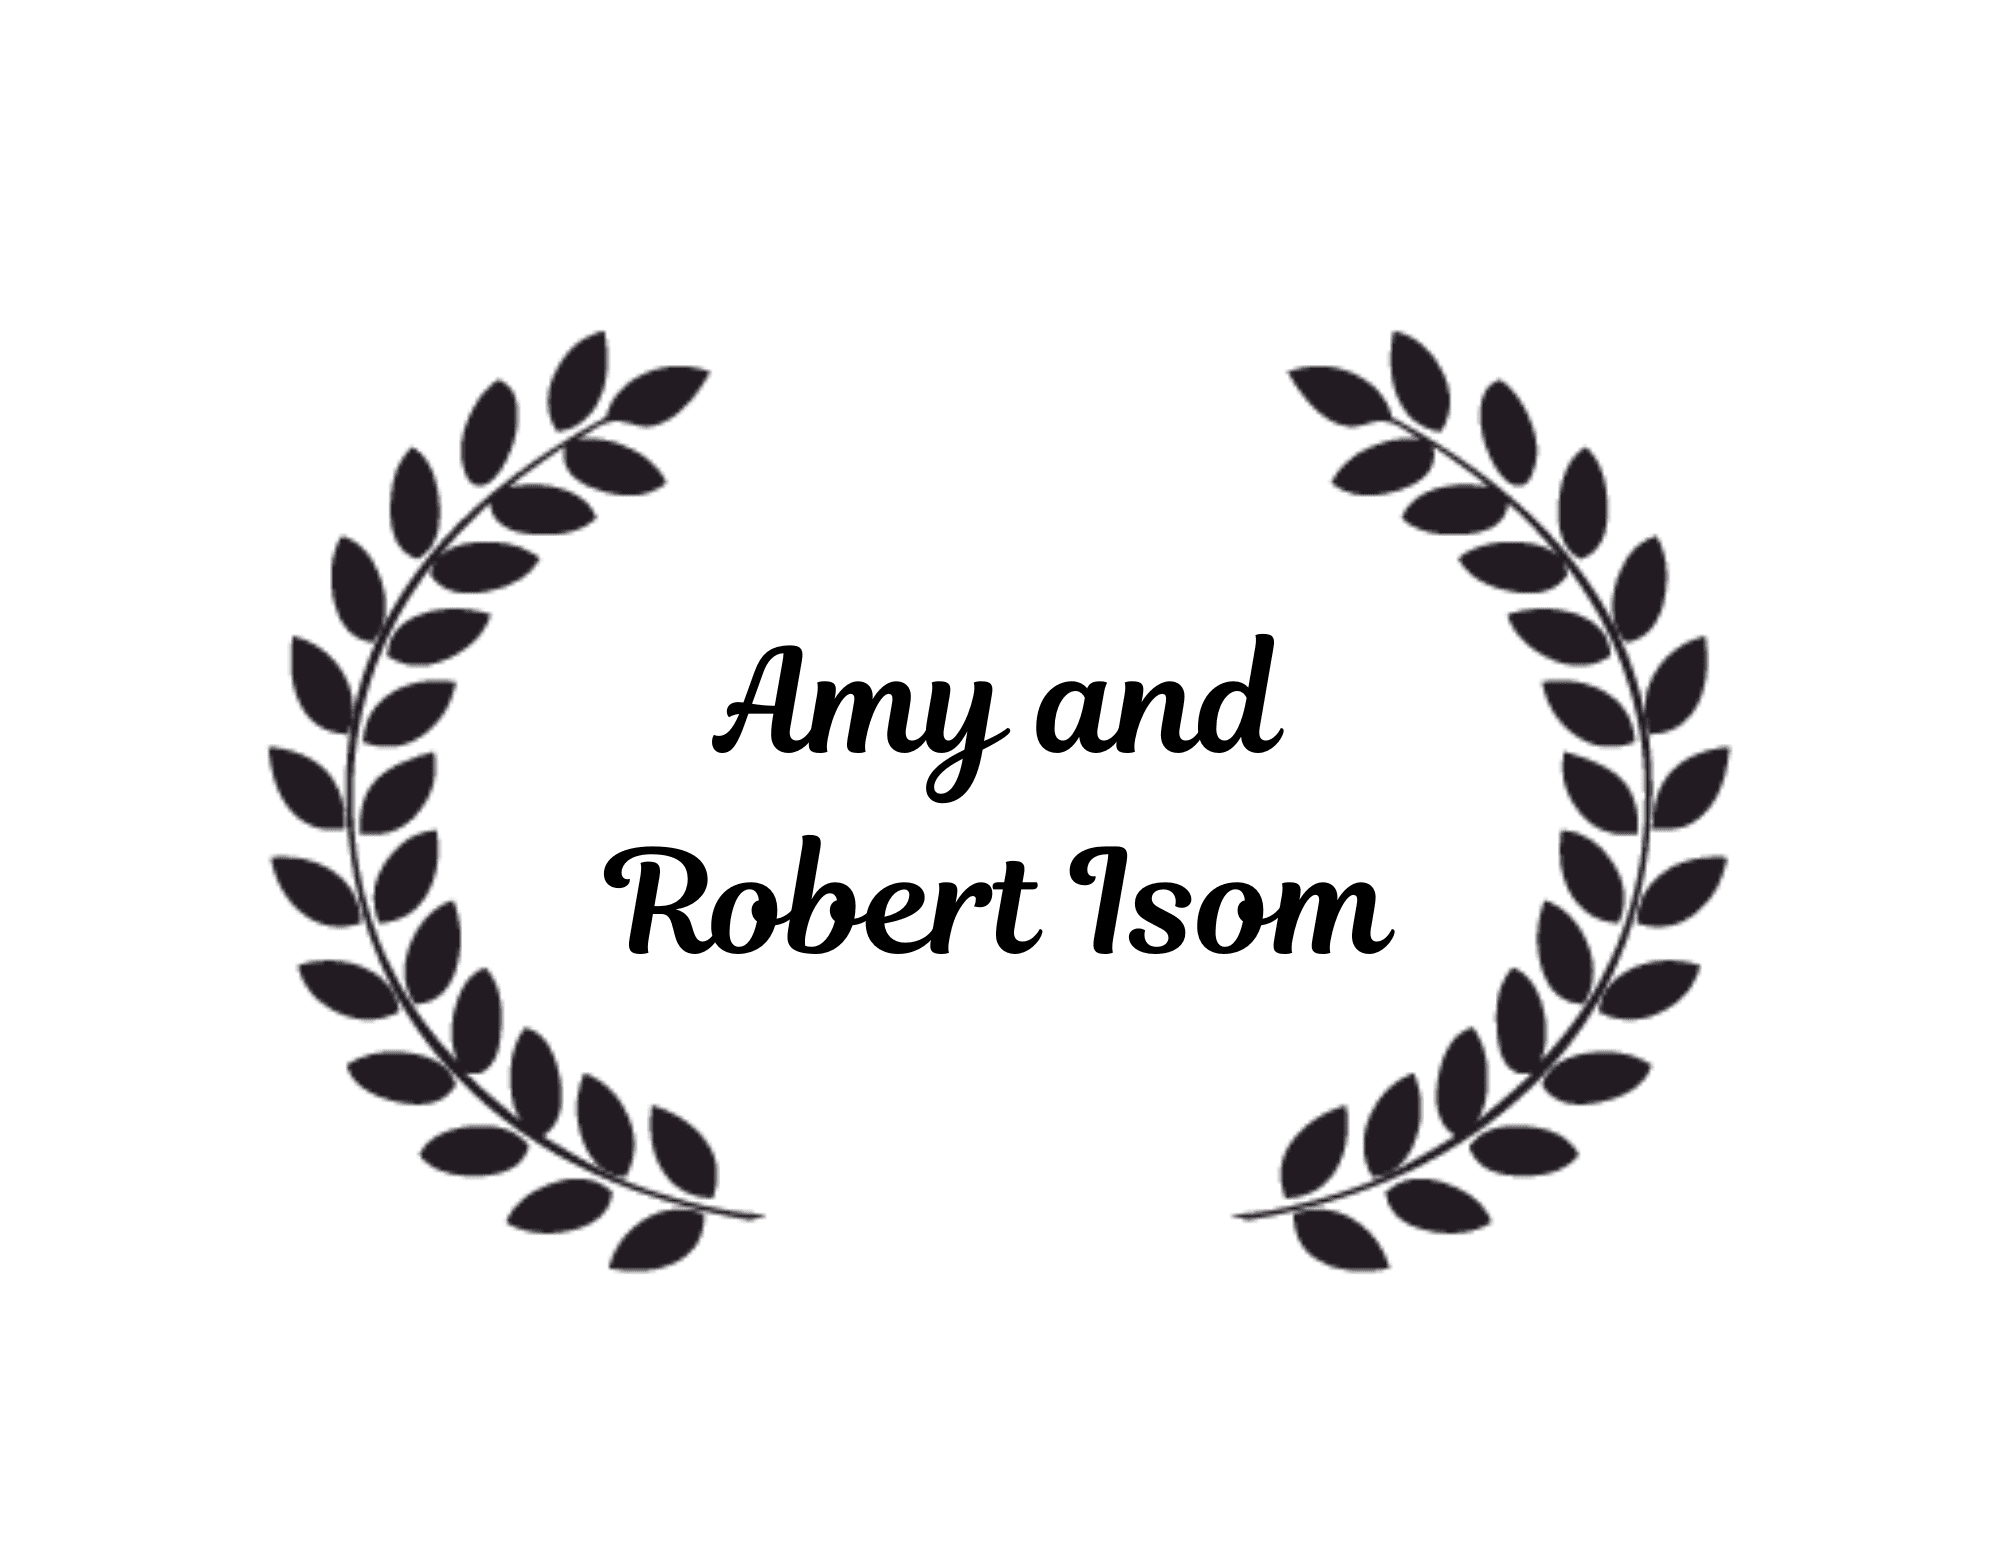 Amy and Robert Isom